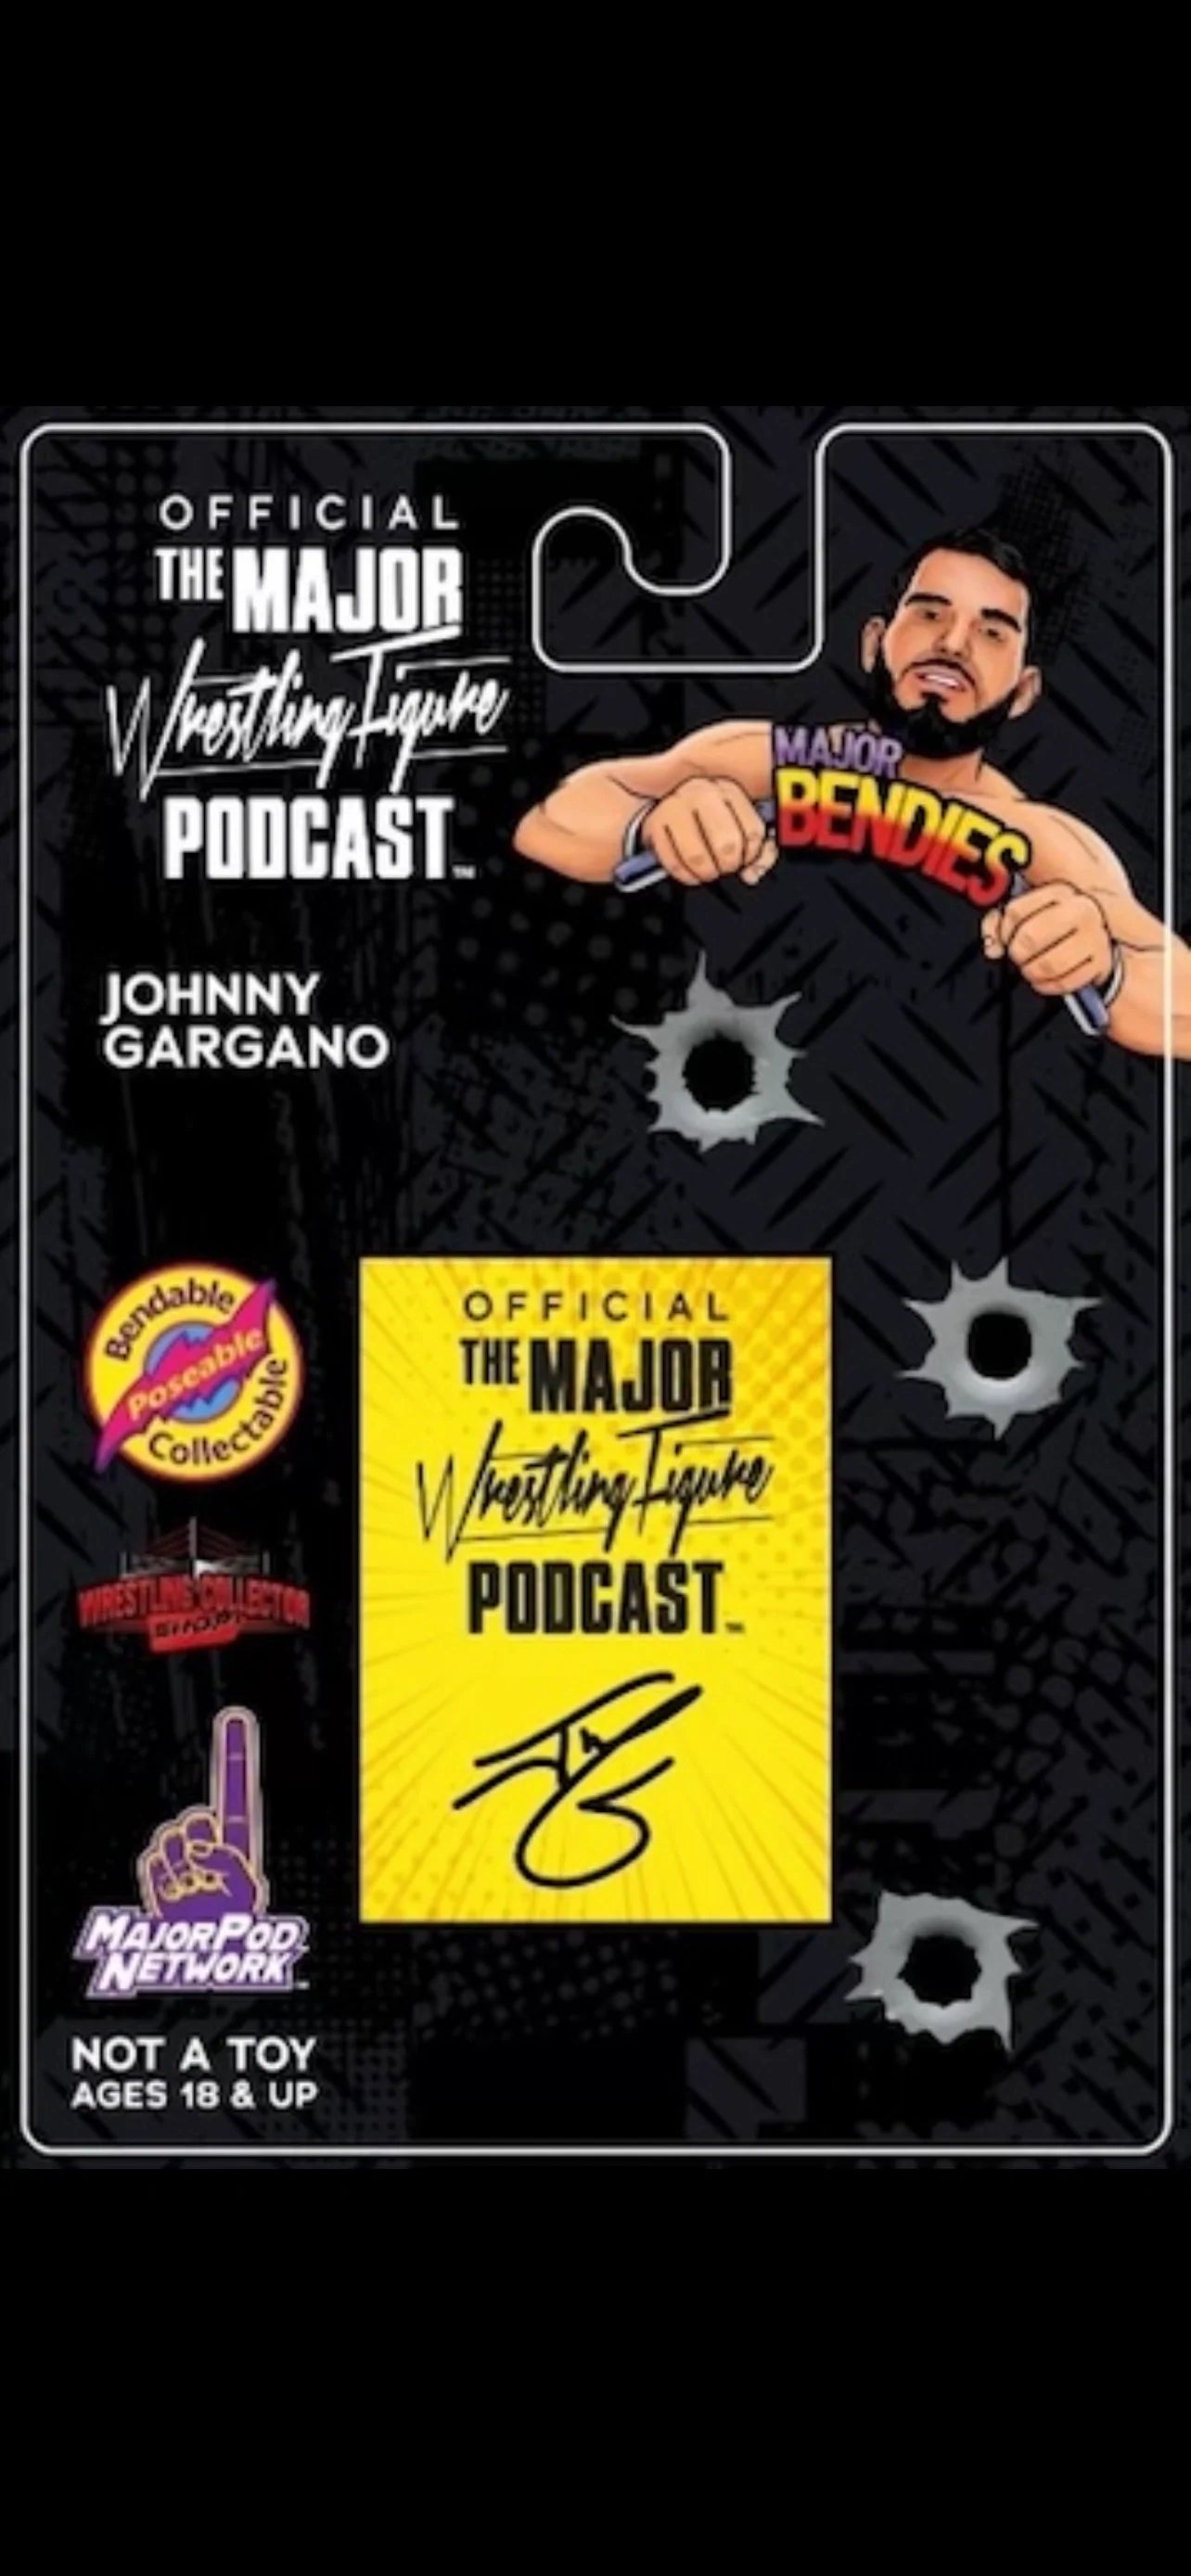 2022 Major Wrestling Figure Podcast Major Bendies Johnny Gargano [Exclusive]